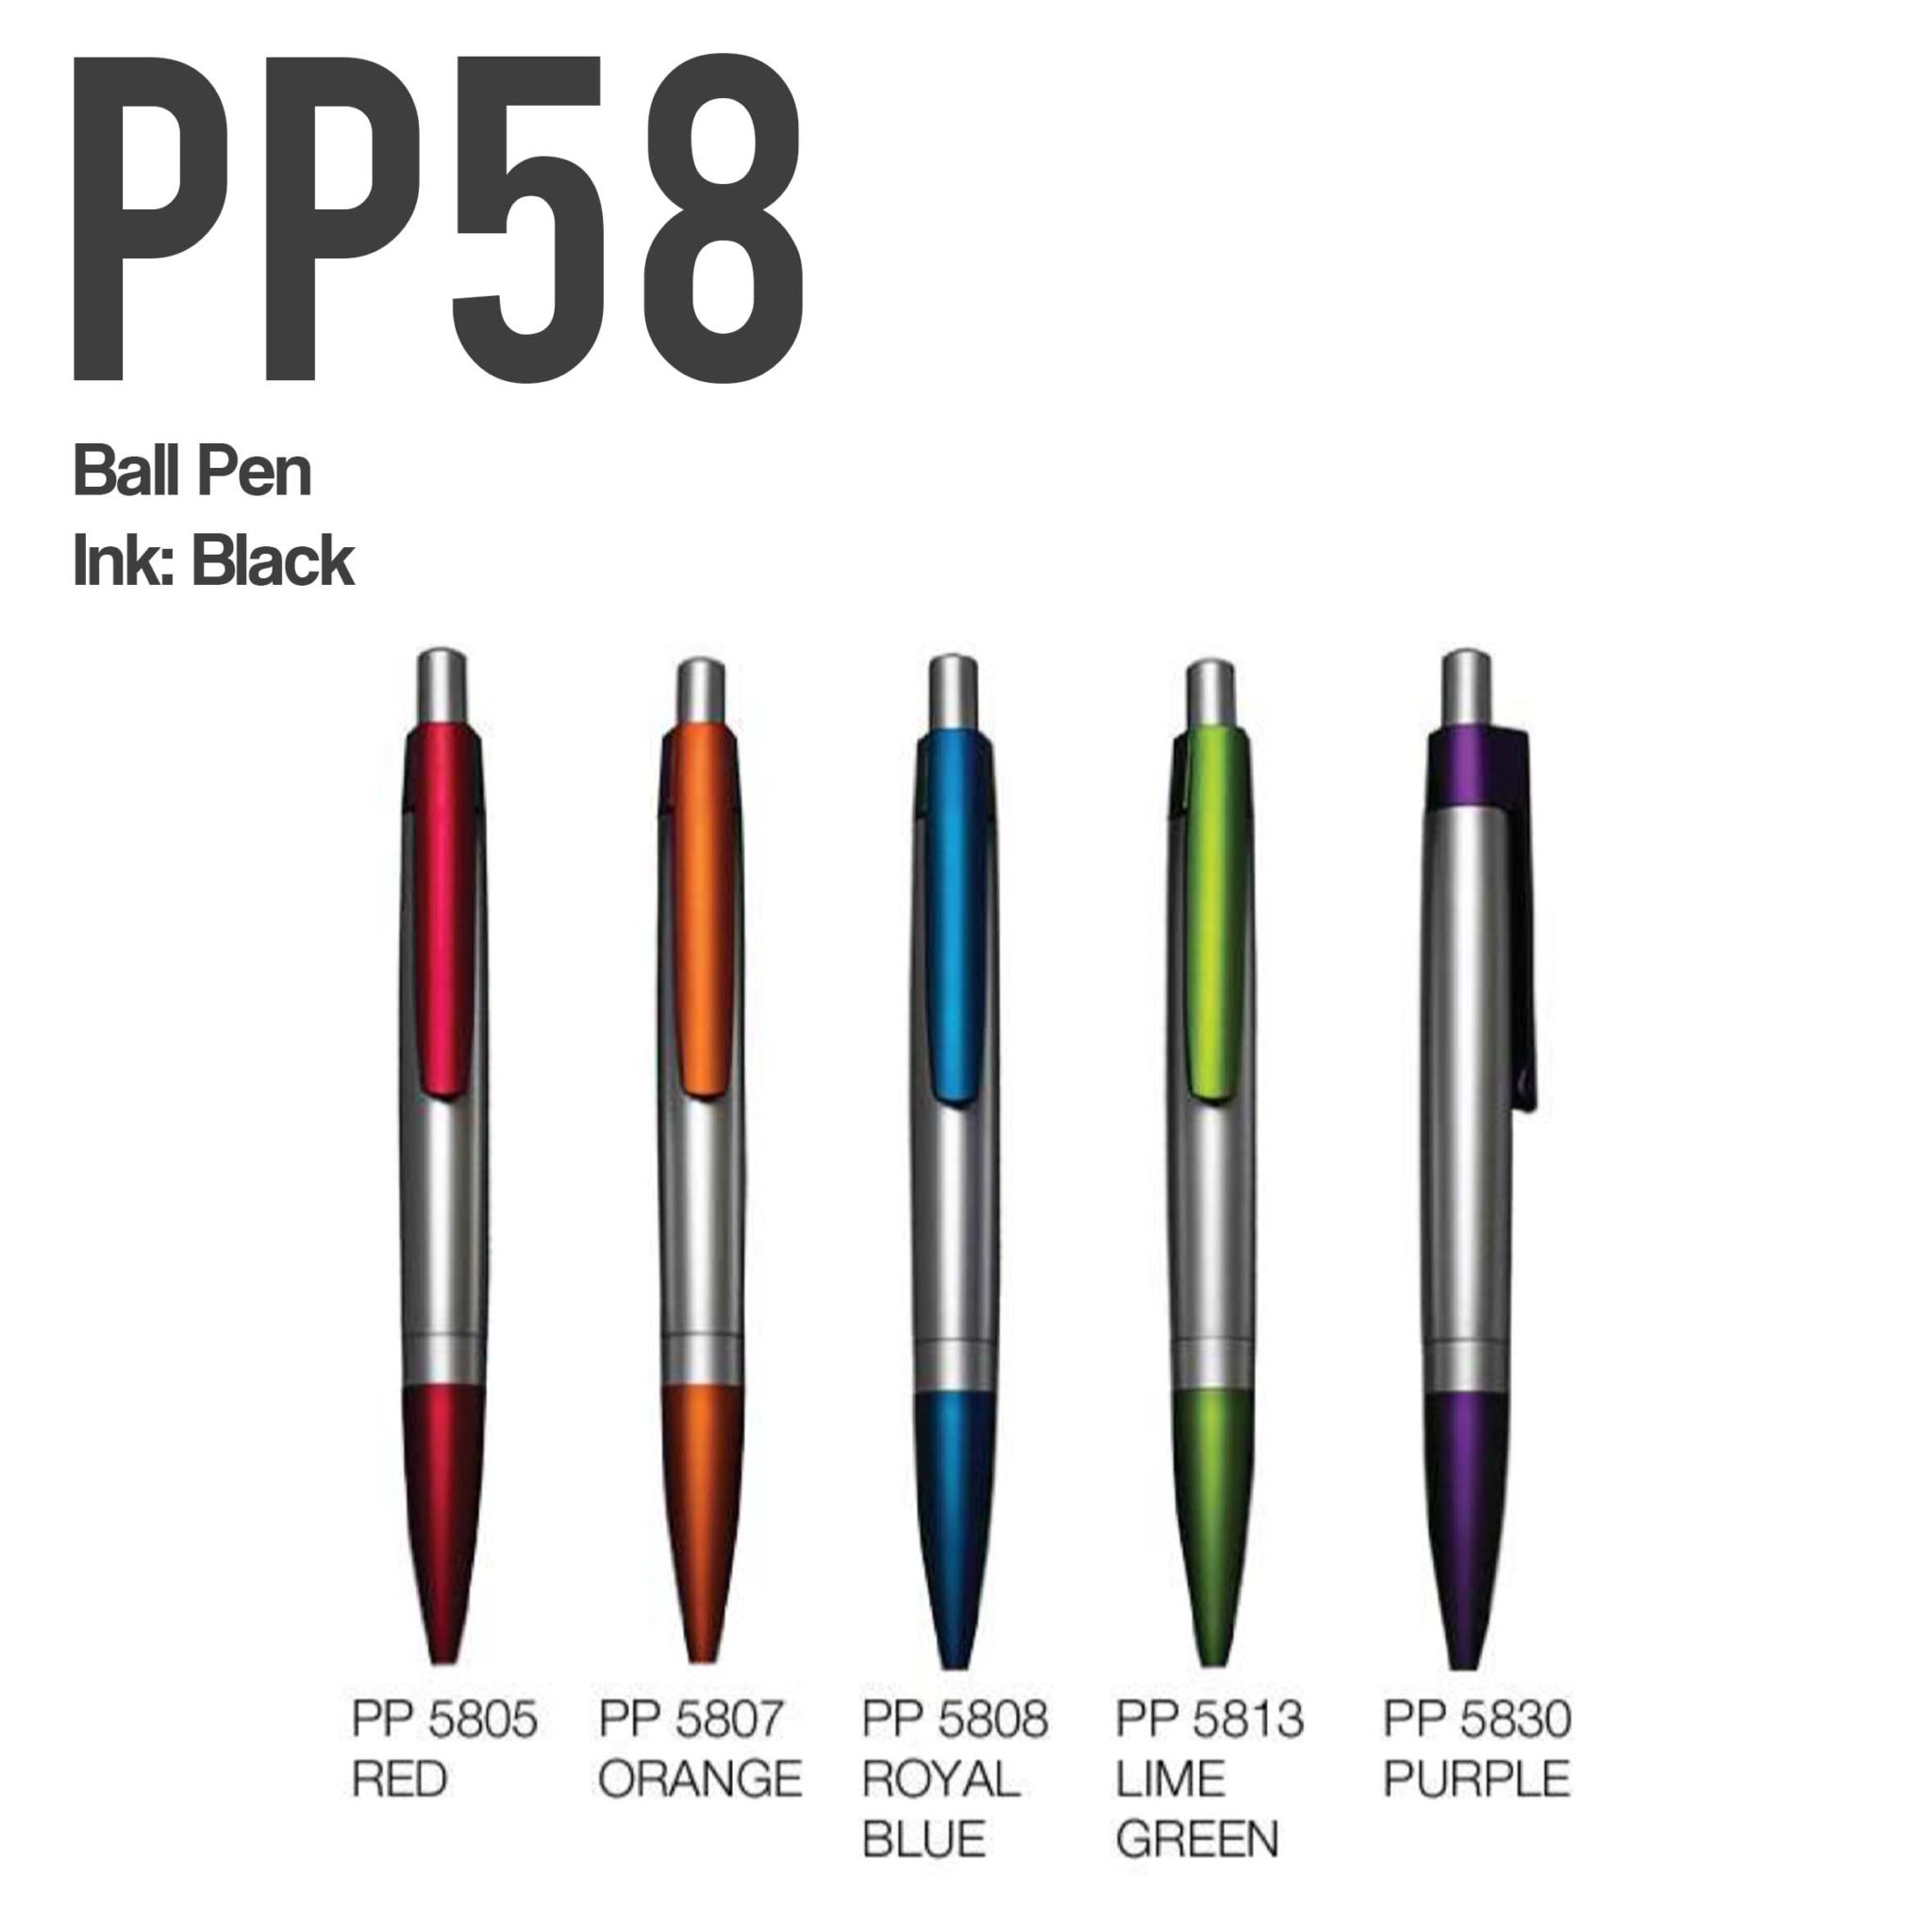 PP58 Plastic pen scaled